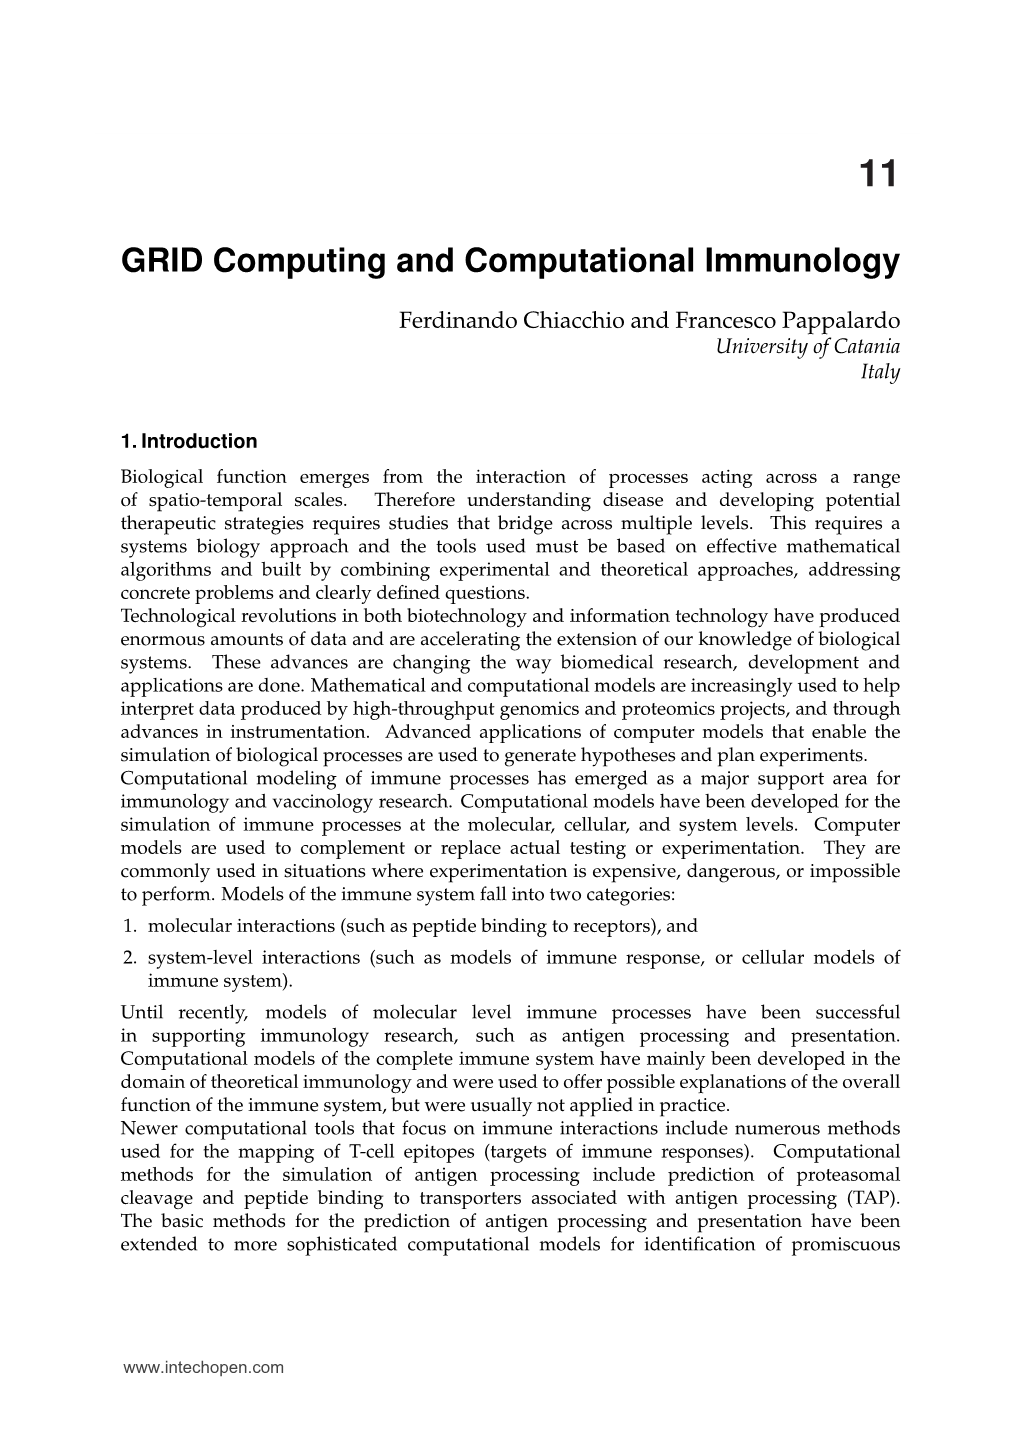 GRID Computing and Computational Immunology